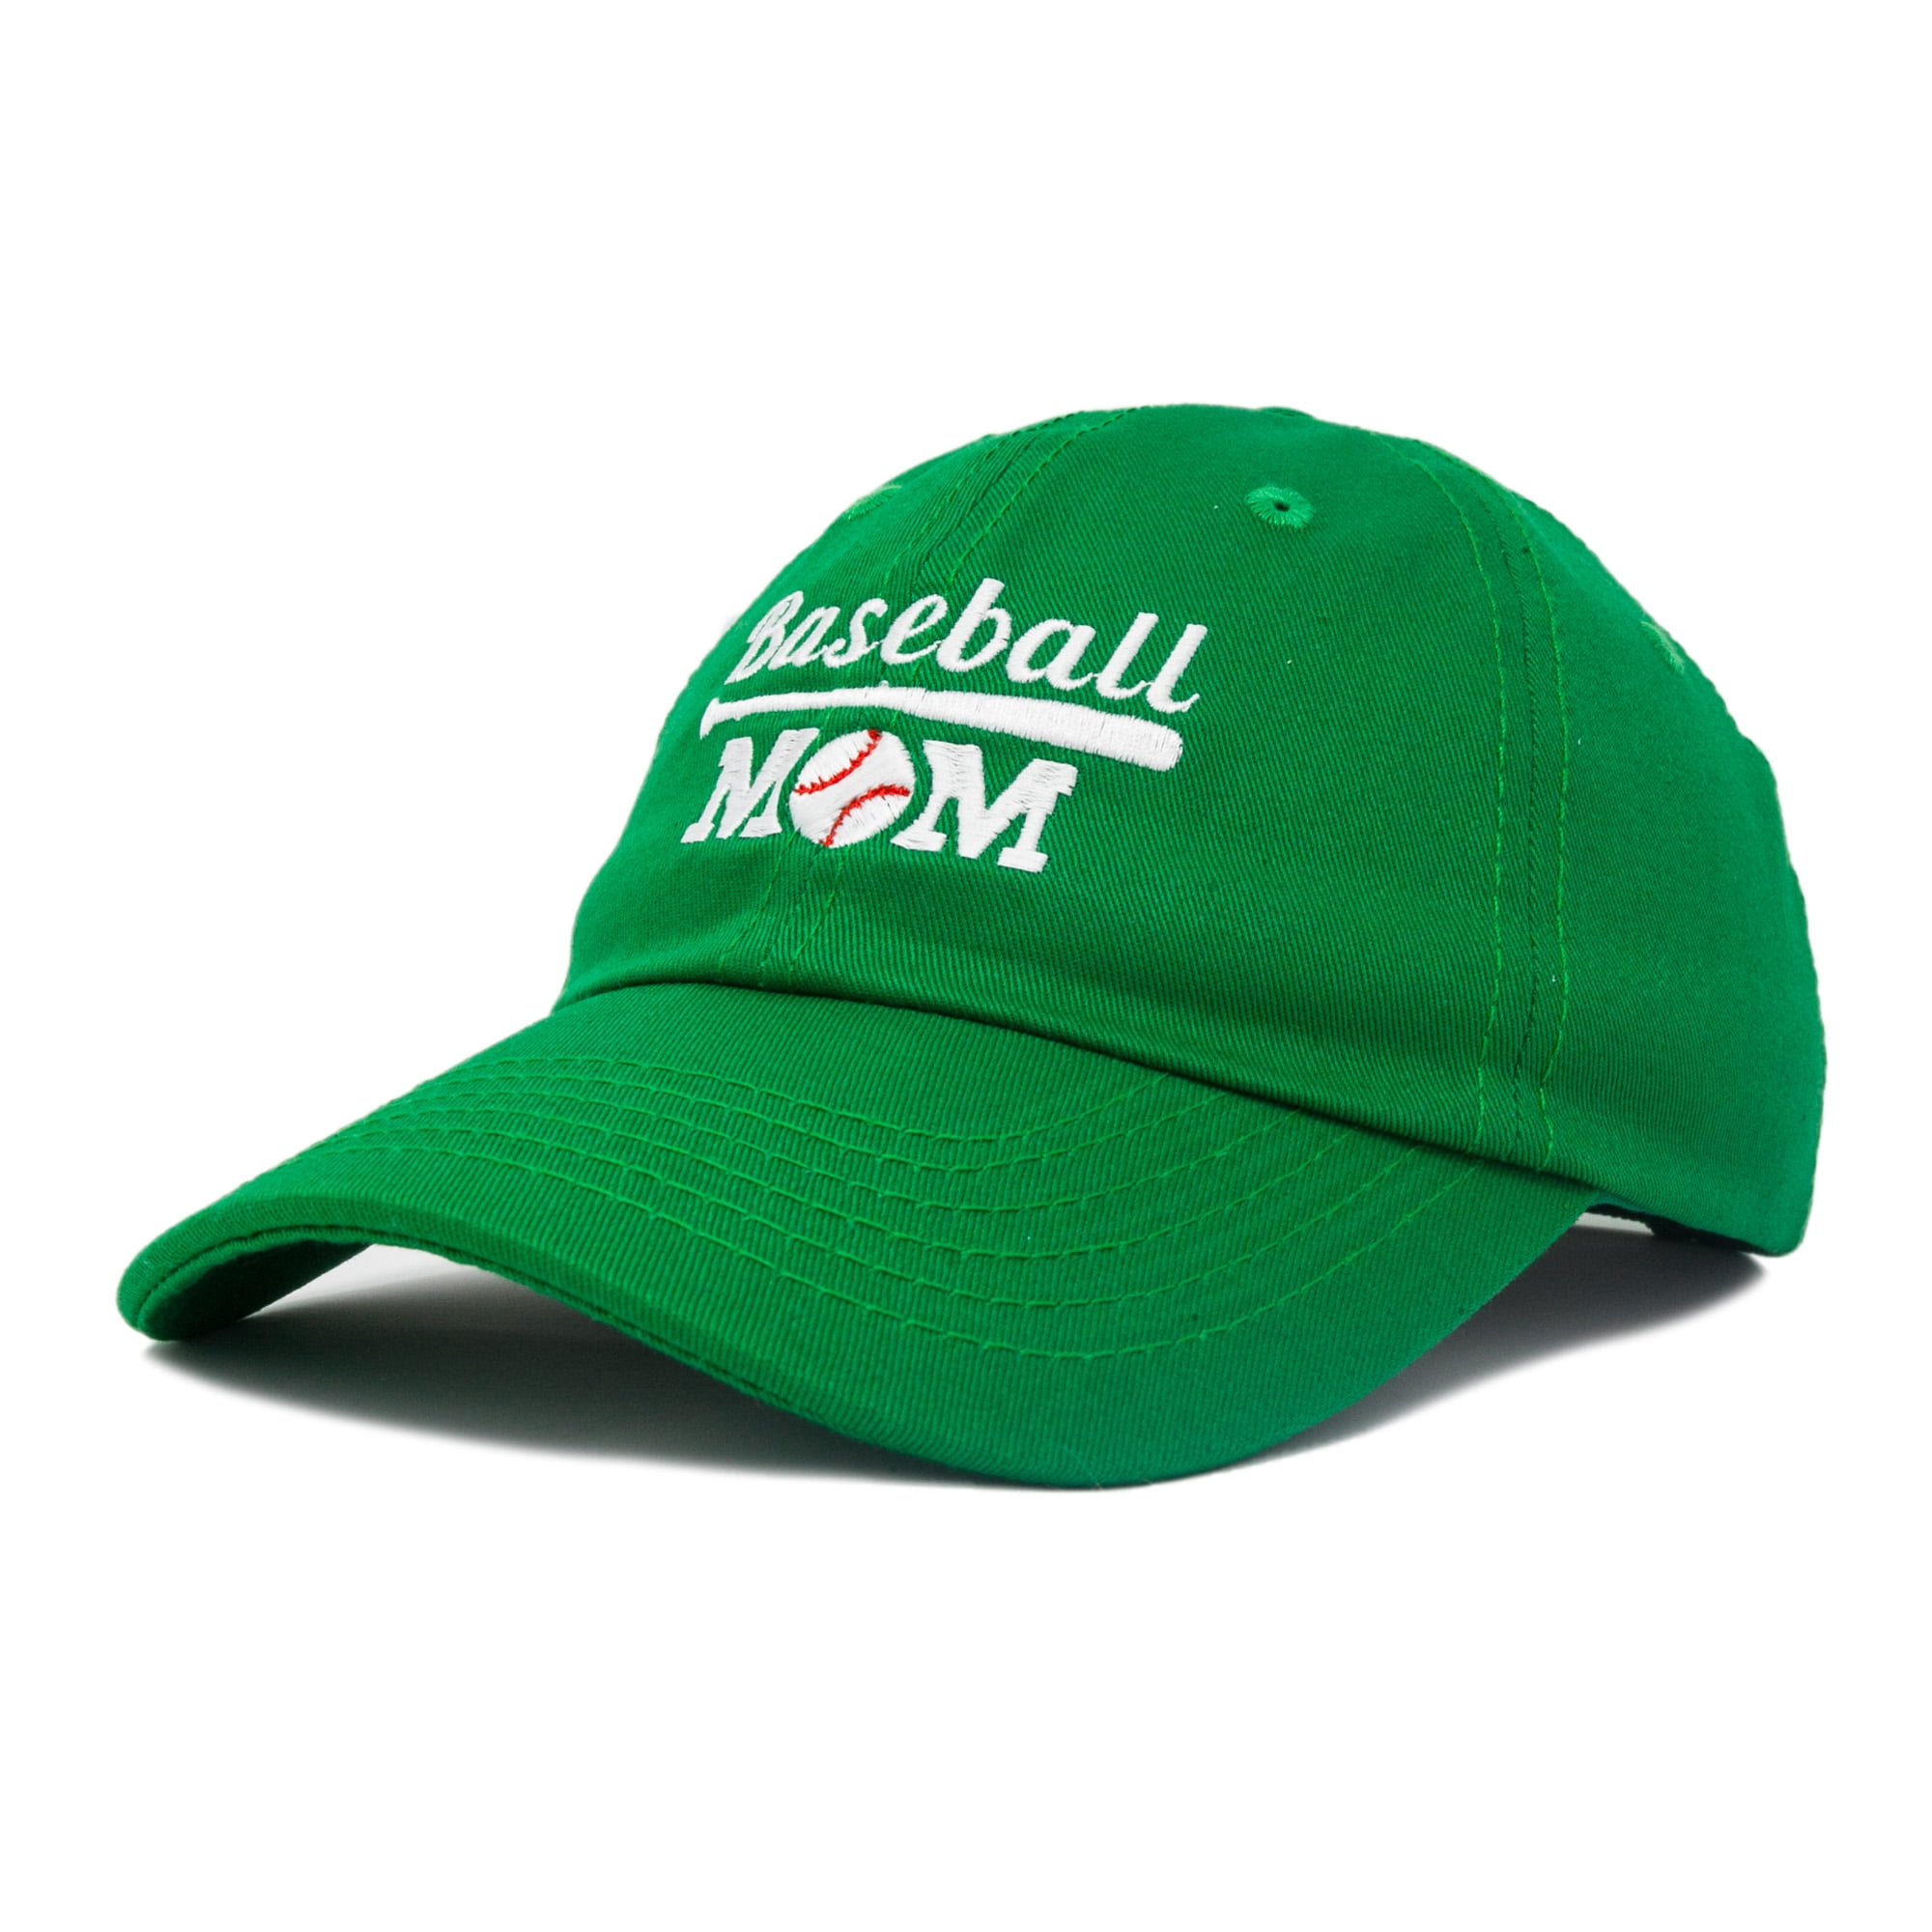 DALIX Baseball Mom Womens Ball Cap Dad Hat for Women